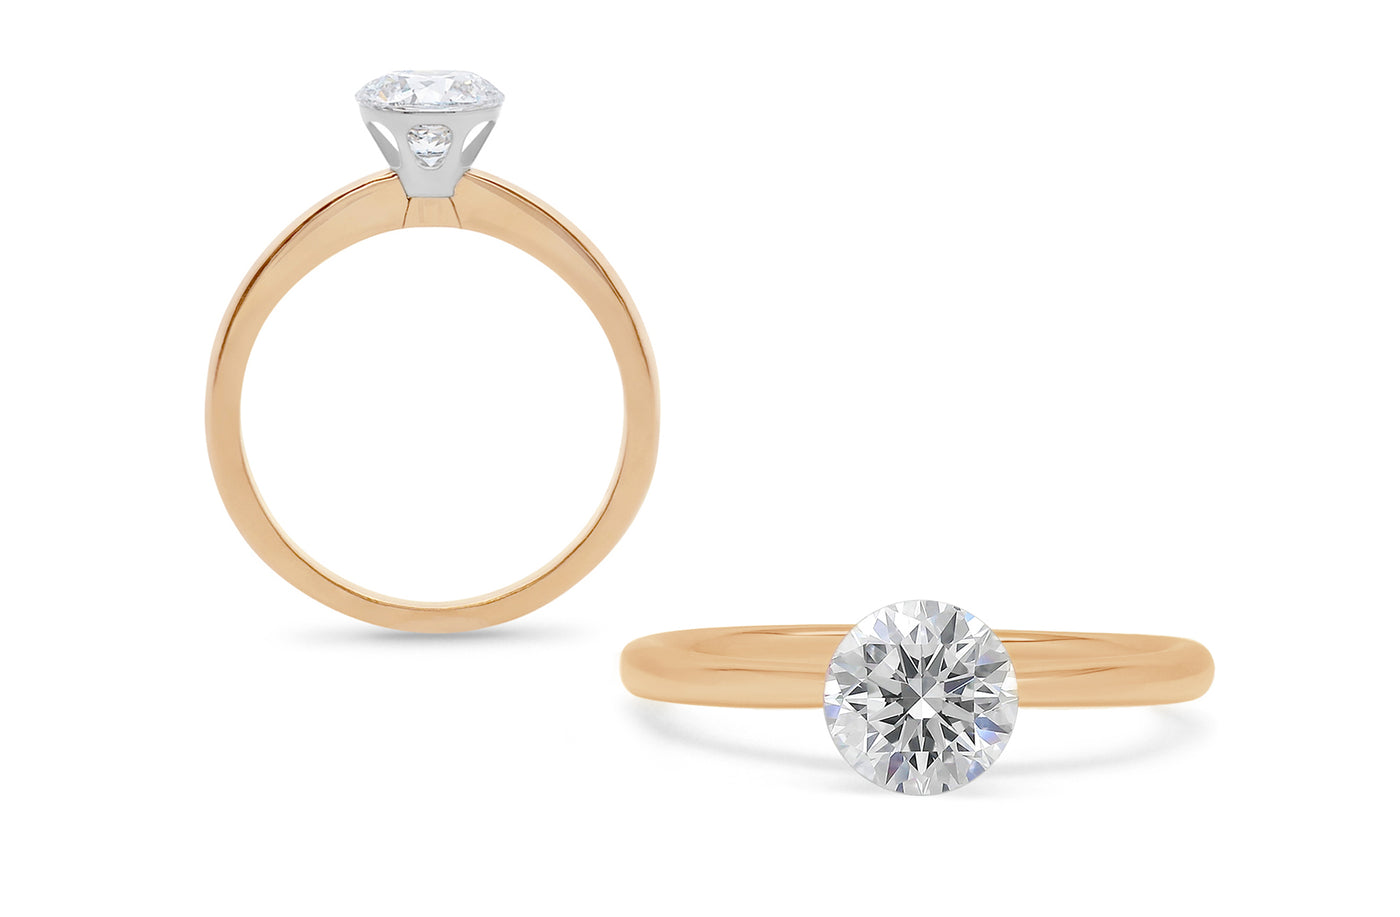 The Floeting® Diamond Ring